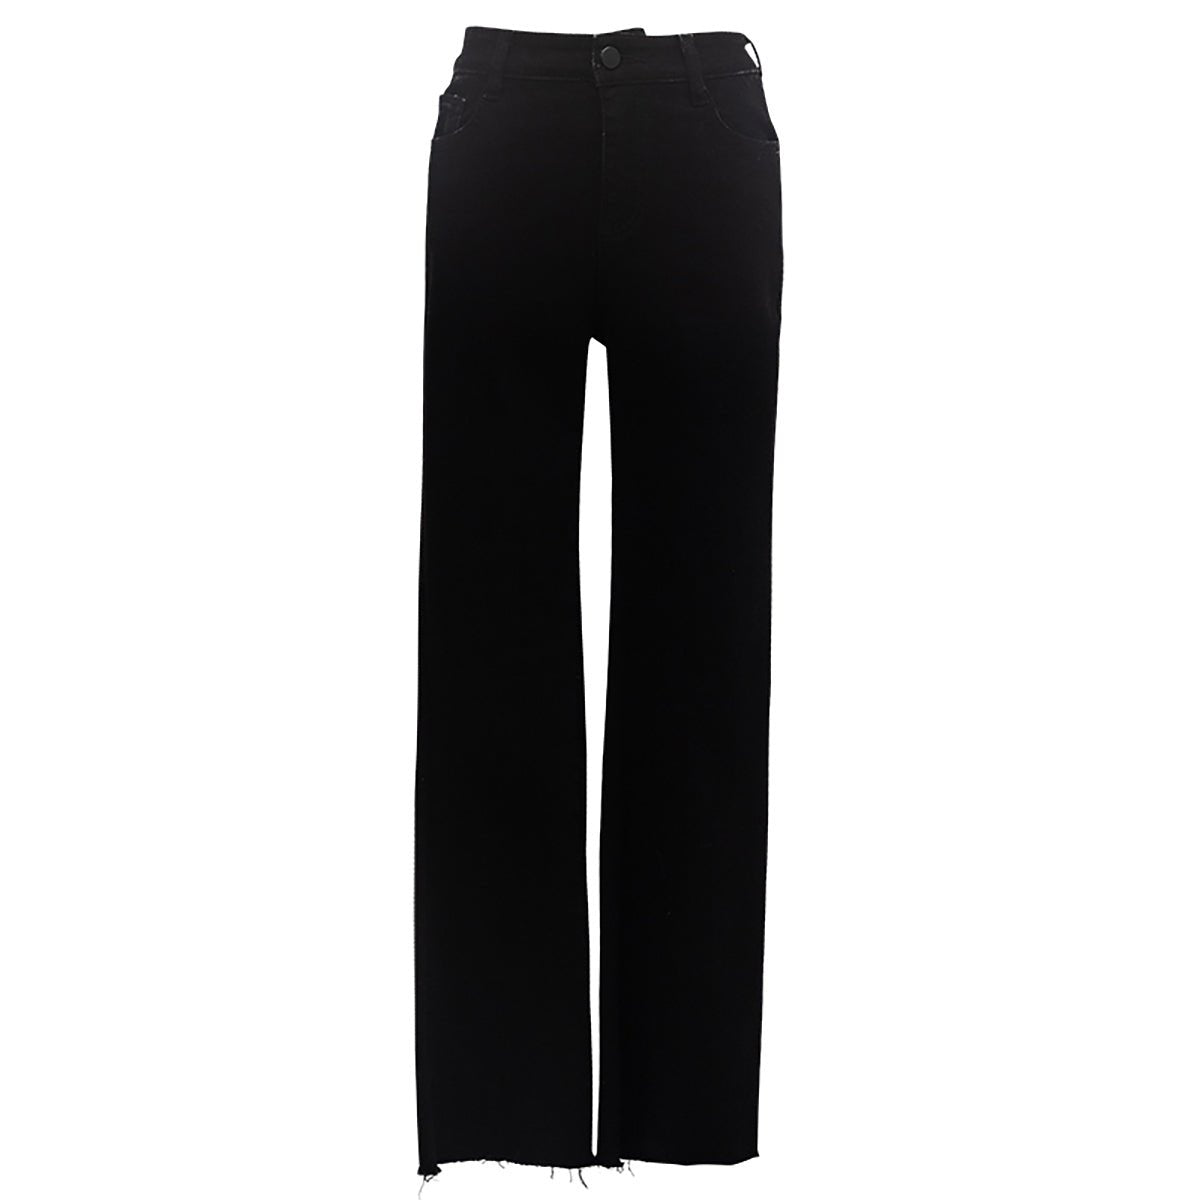 Black Ankle-Length Jeans - 0cm